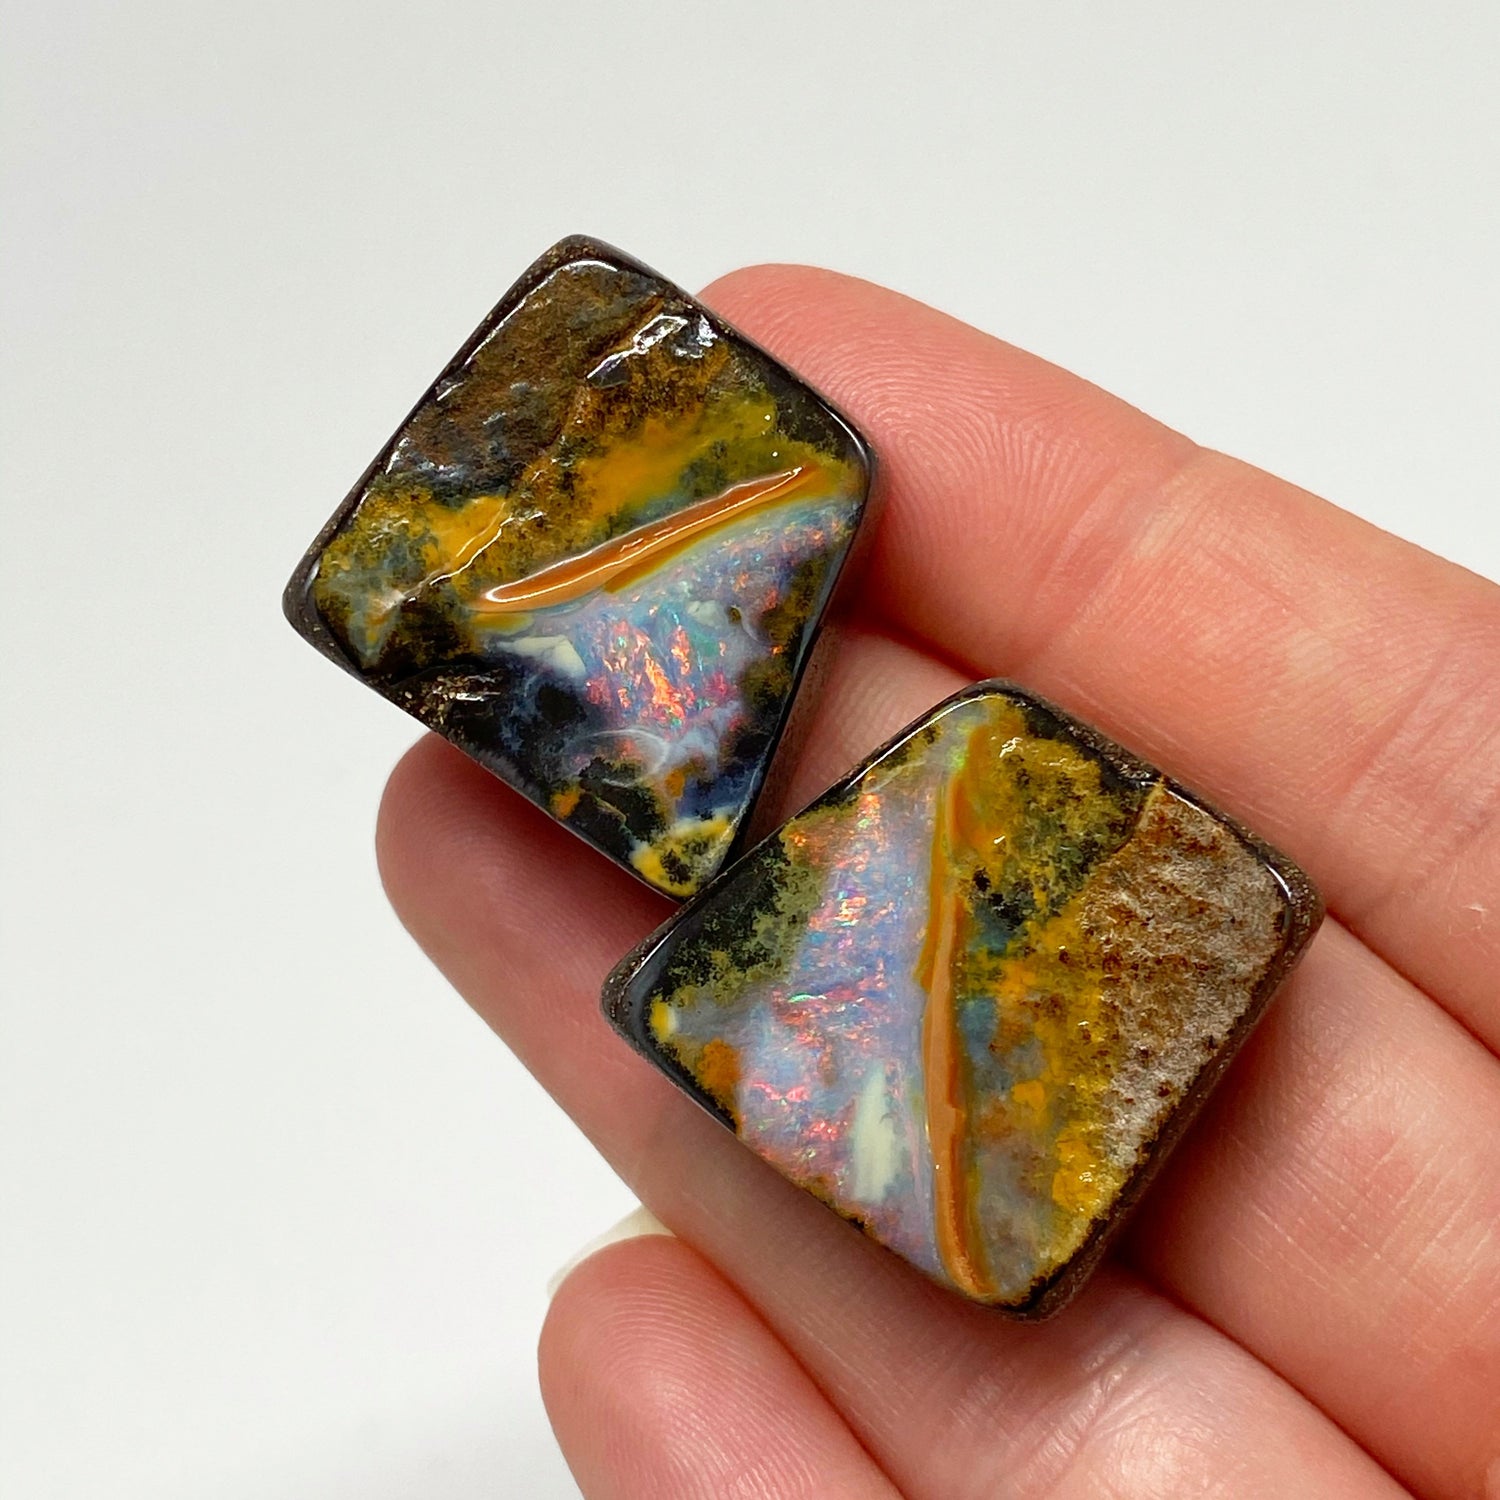 Australian Boulder Opal - 155 Ct small pink boulder opal 'split' specimen pair - Broken River Mining